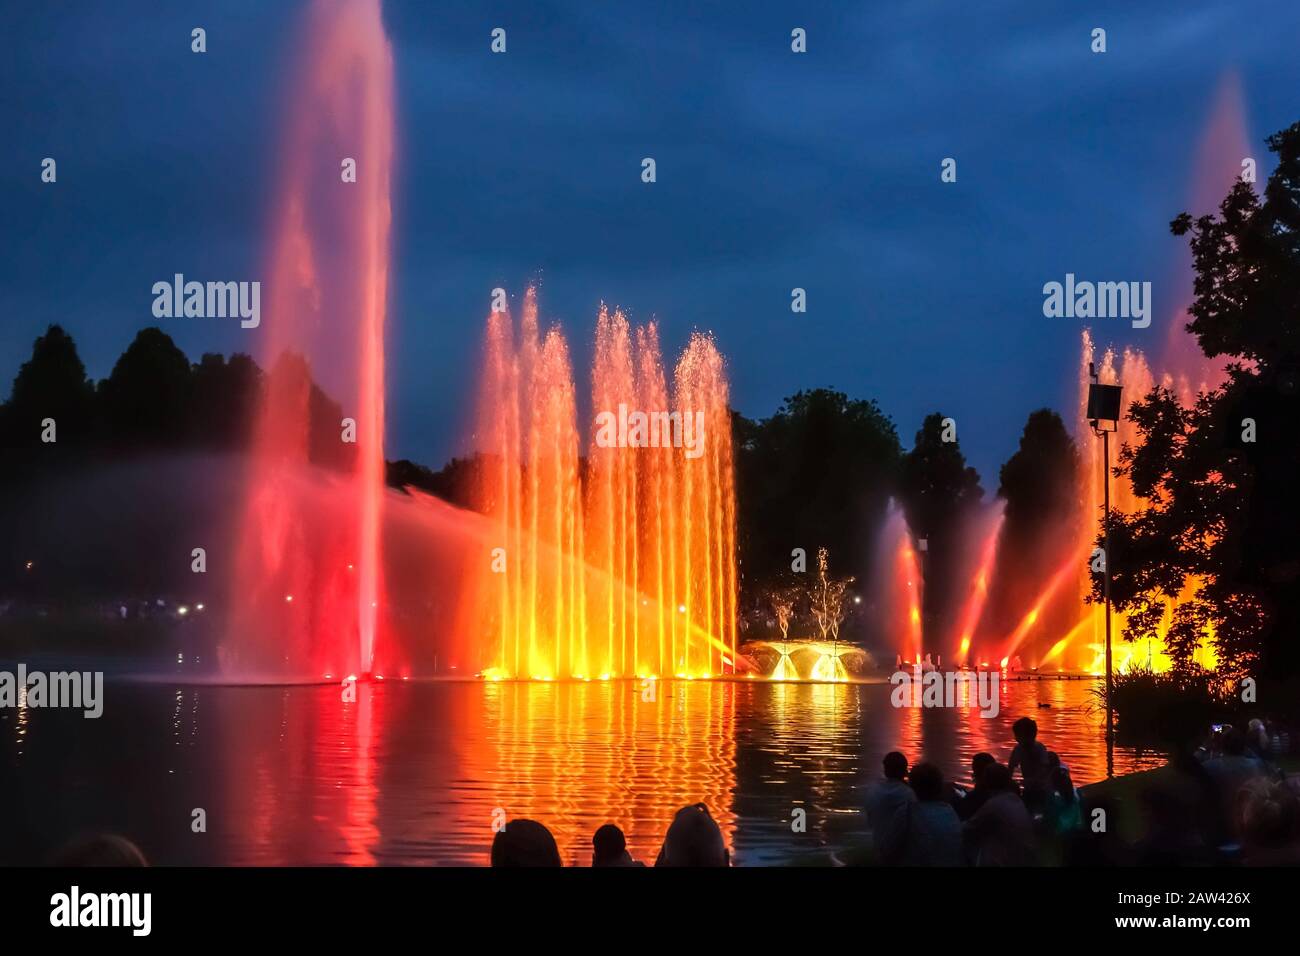 Hamburg, Germany - June 7, 2014: Park Planten un Blomen - famous water light concert Stock Photo